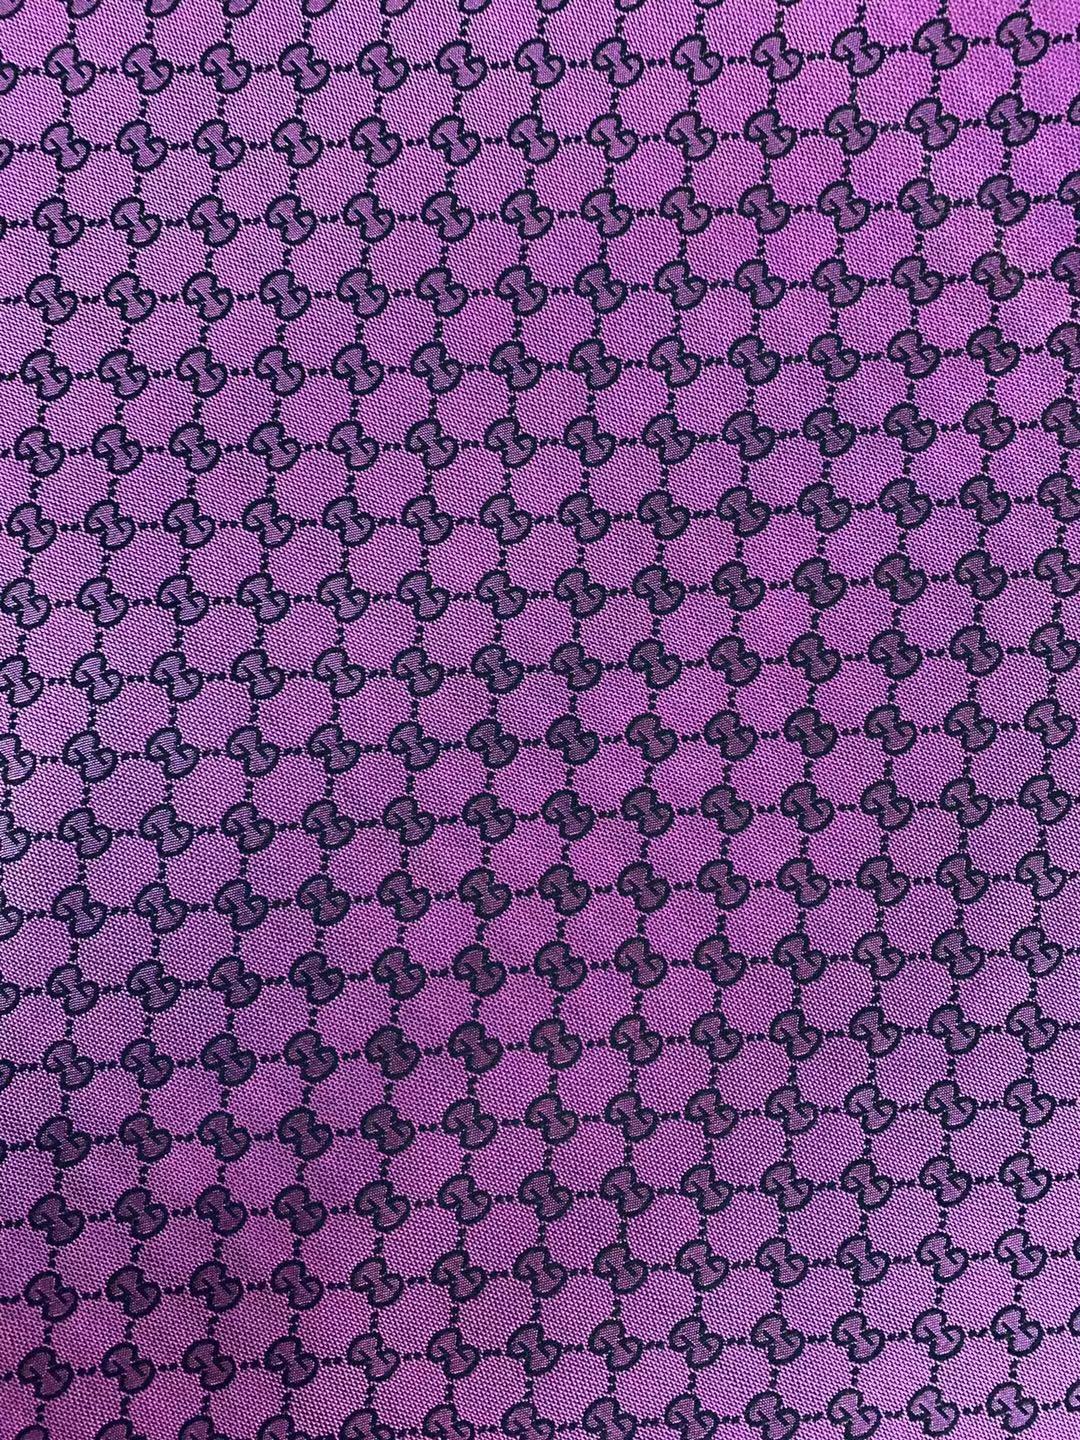 Fashion Gucci Jacquard Fabric Cloth, Fabric Bags Fabric Shoes Fabric Hat Fabric By Yards (Purple)